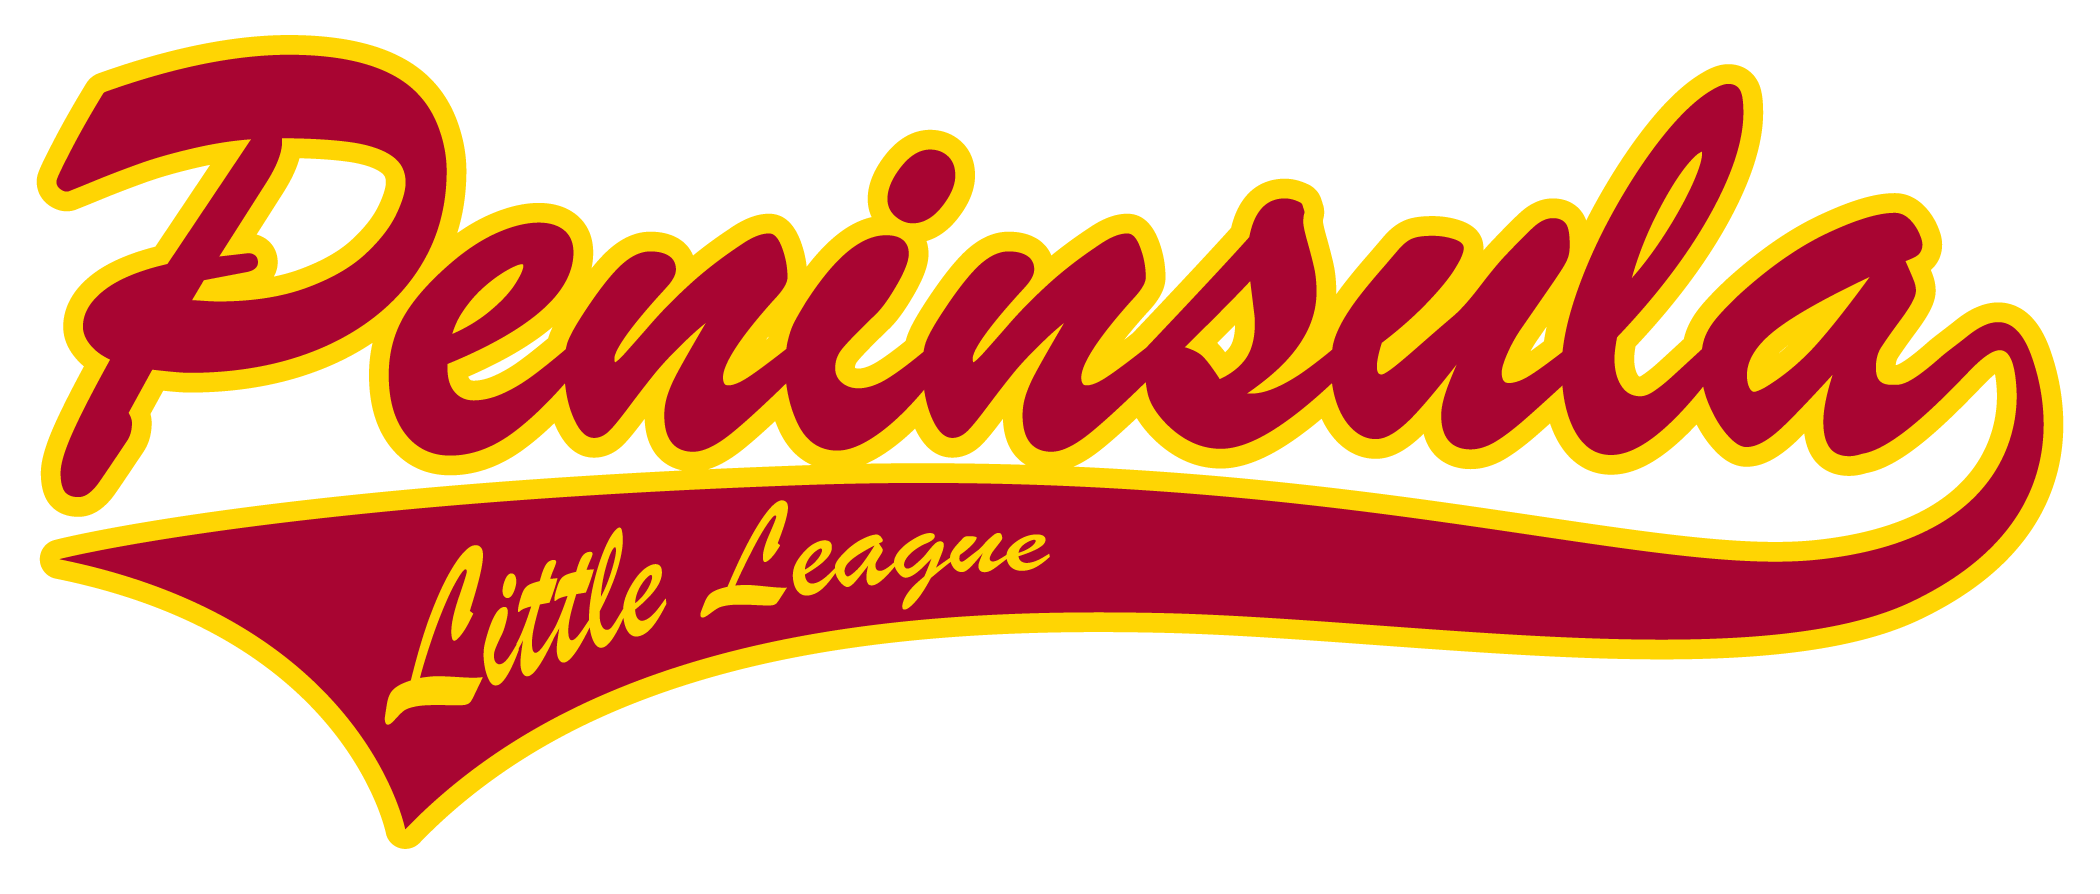 Peninsula Little League logo